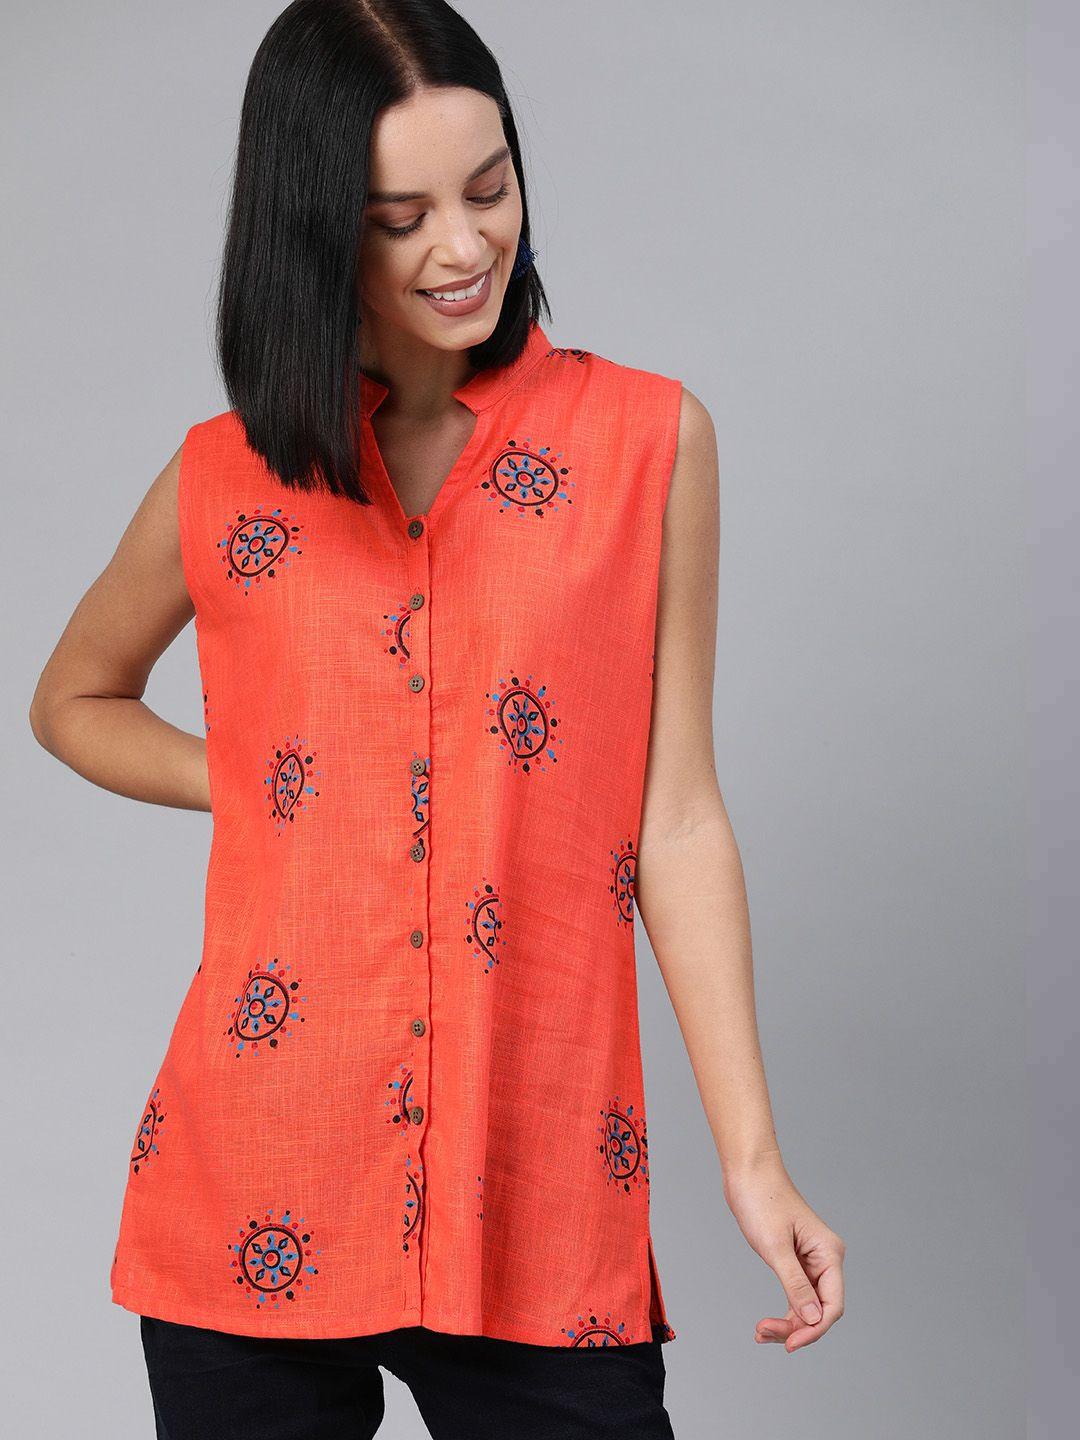 swishchick-women's-orange-ethnic-printed-tunic